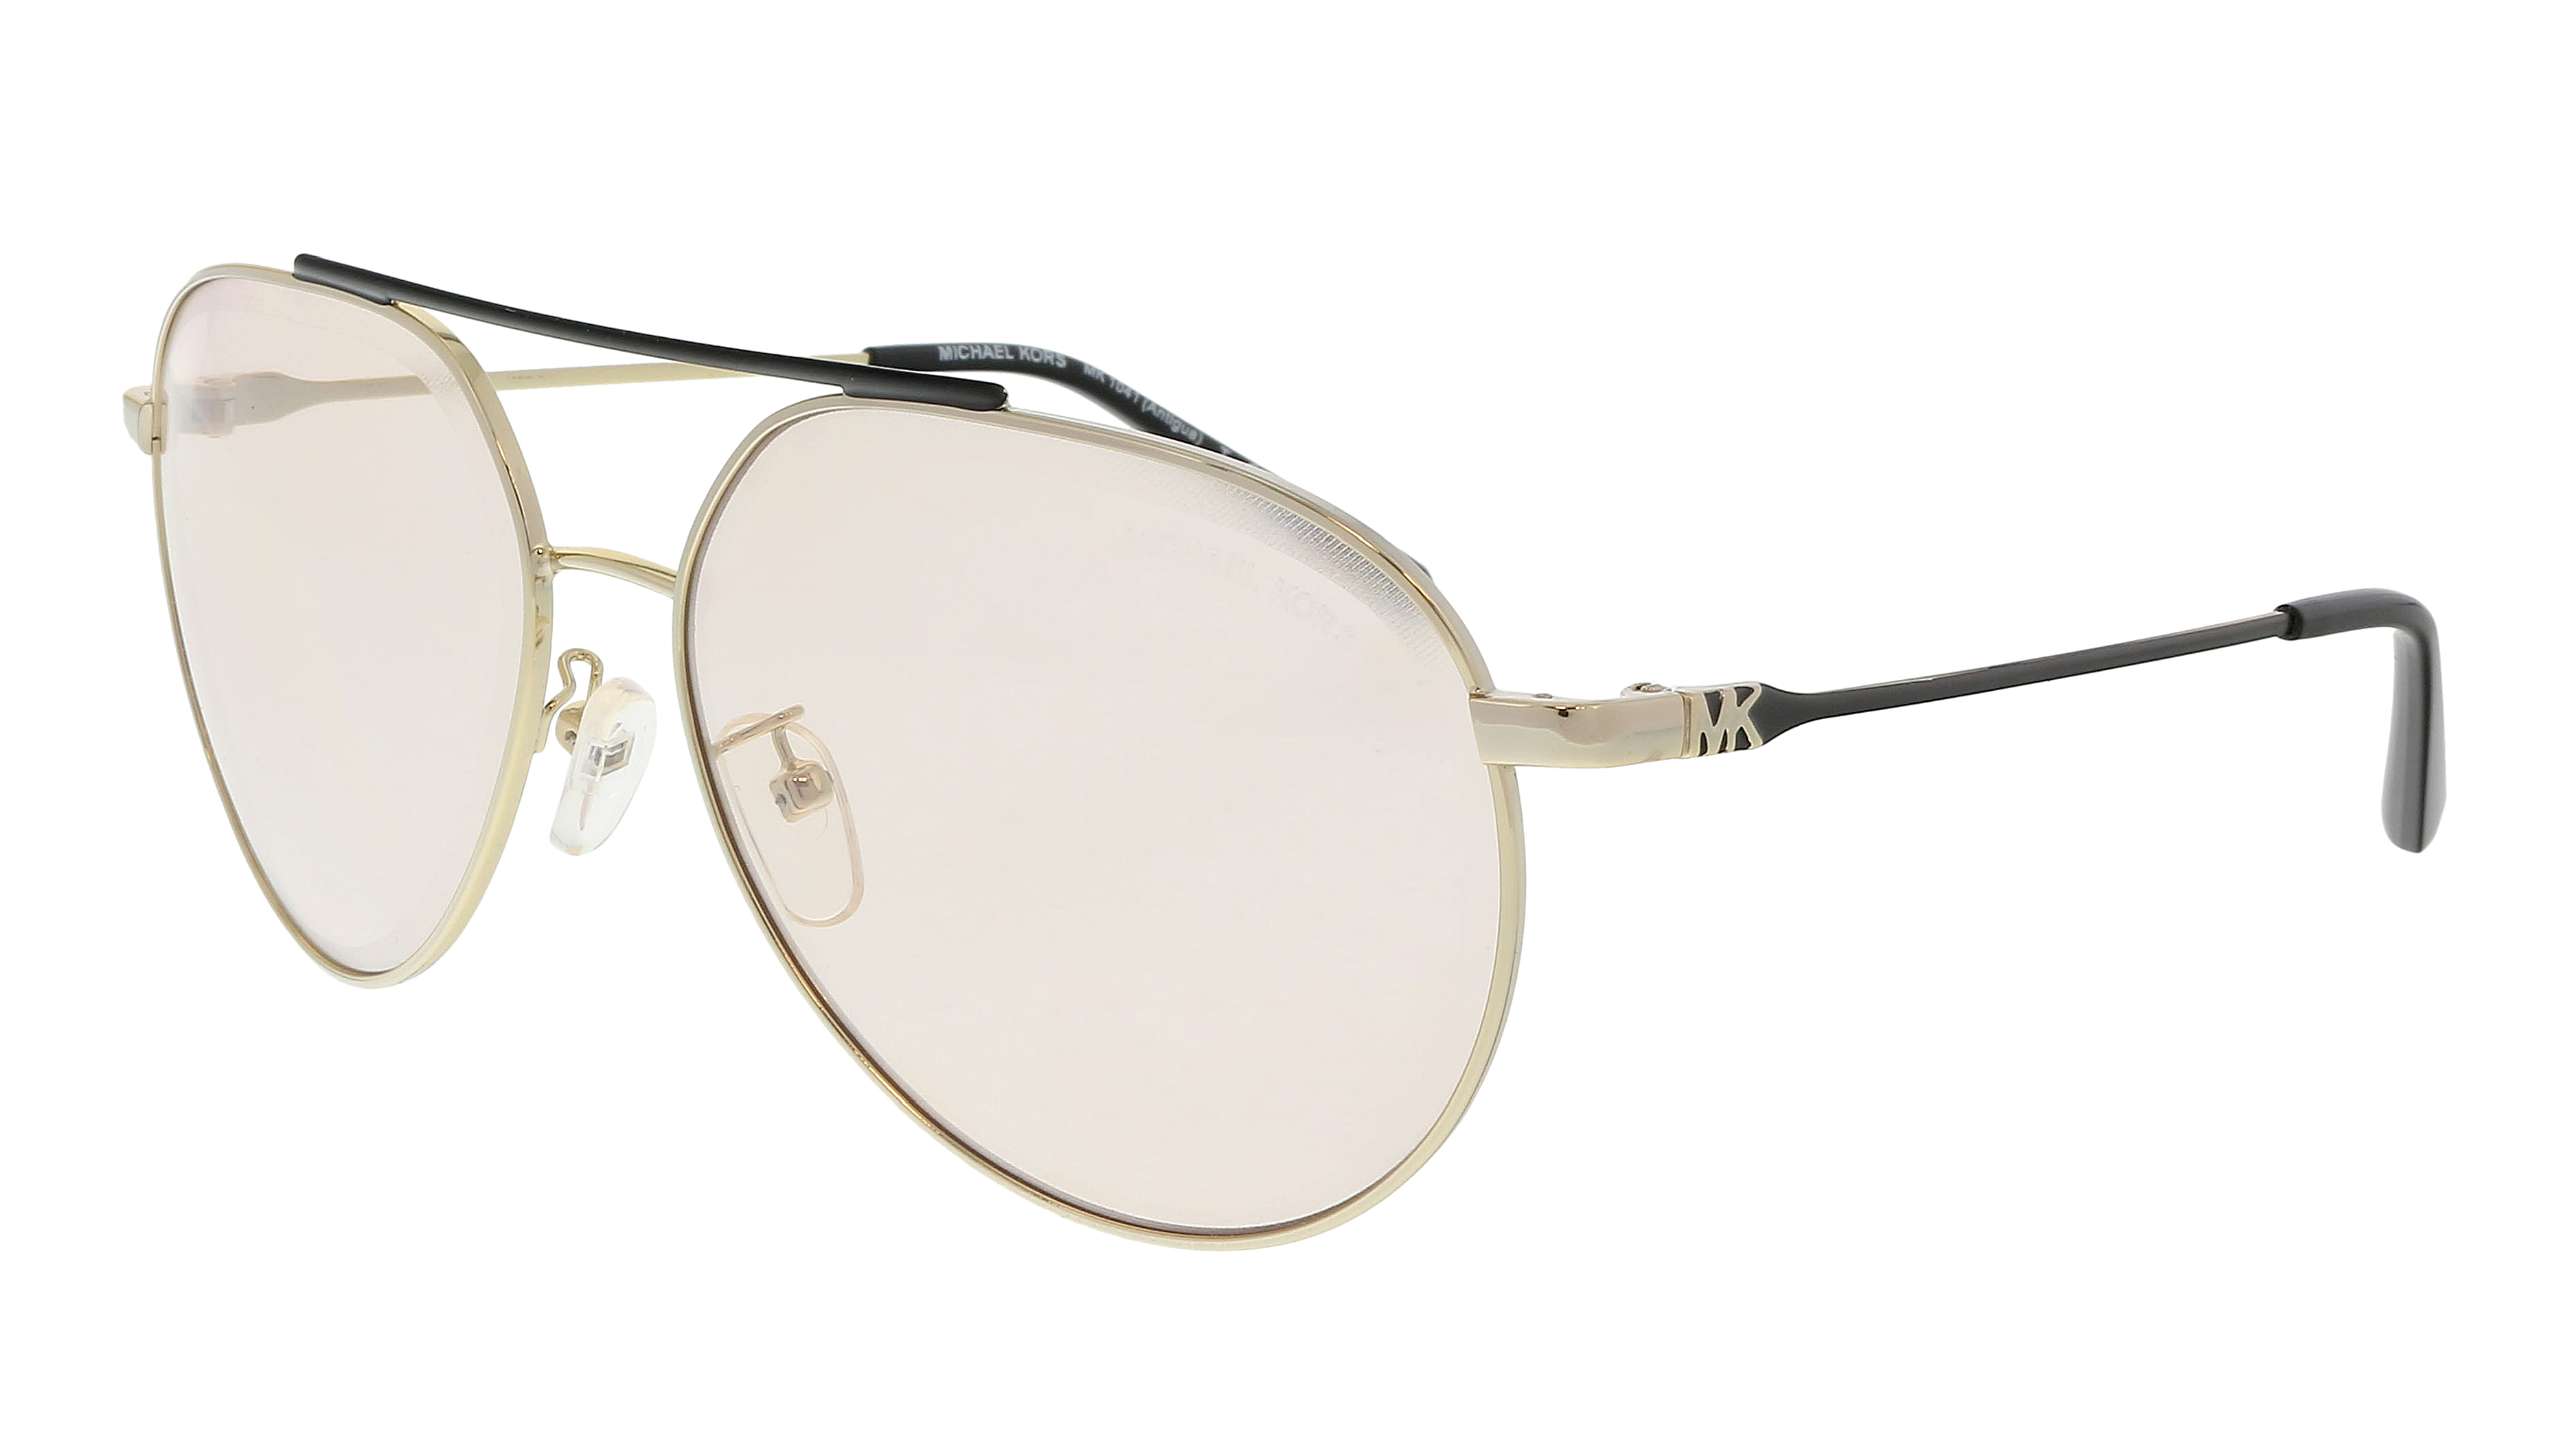 Michael Kors ANTIGUA MK1041 Sunglasses 101473-60 - Men's, Shiny Pale Gold Frame, MK1041-101473-60 - image 1 of 5